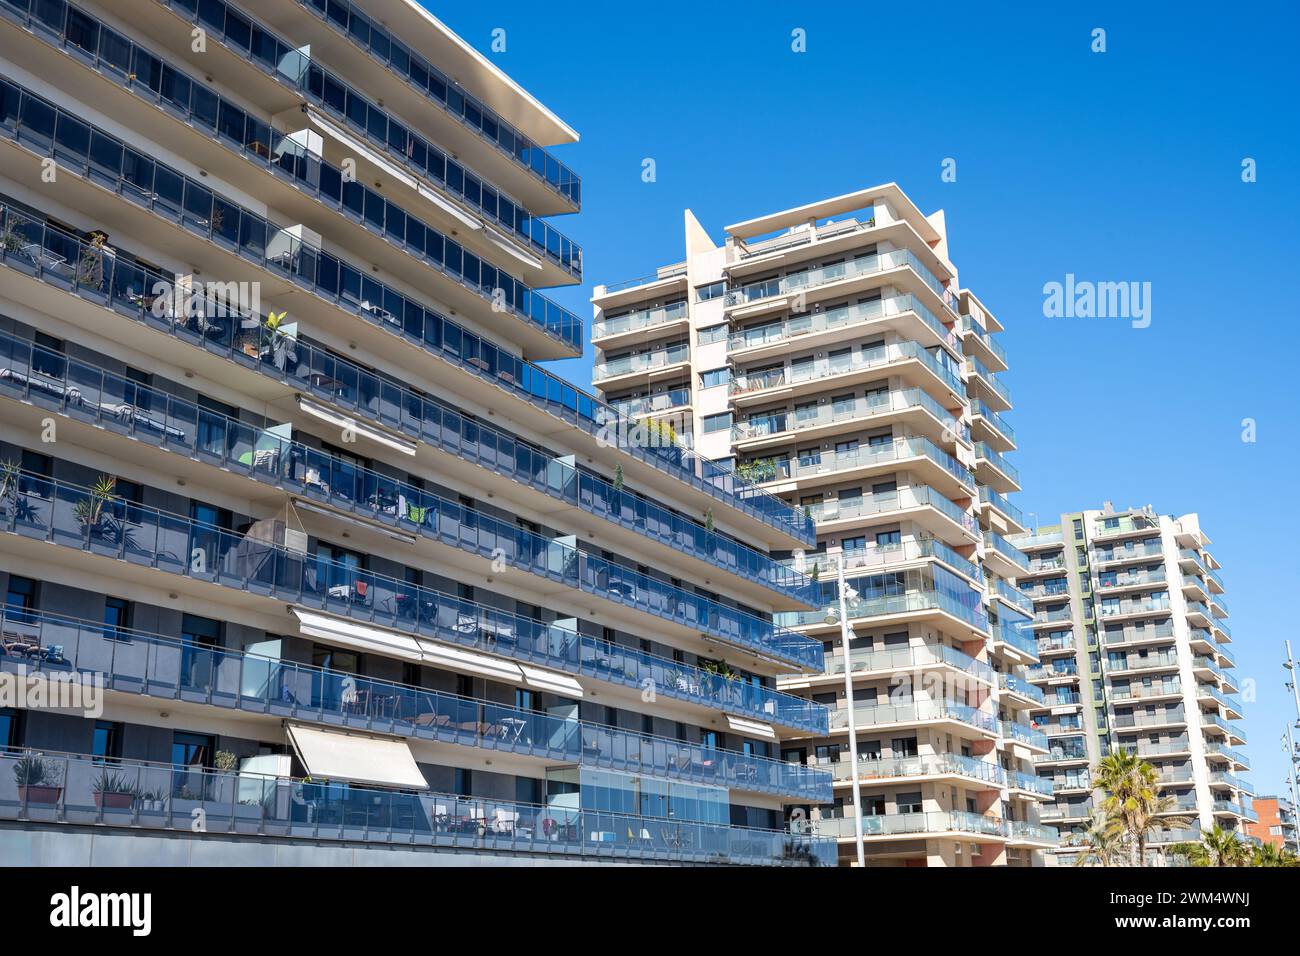 Modern high rise apartment buildings seen in Badalona, Spain Stock Photo